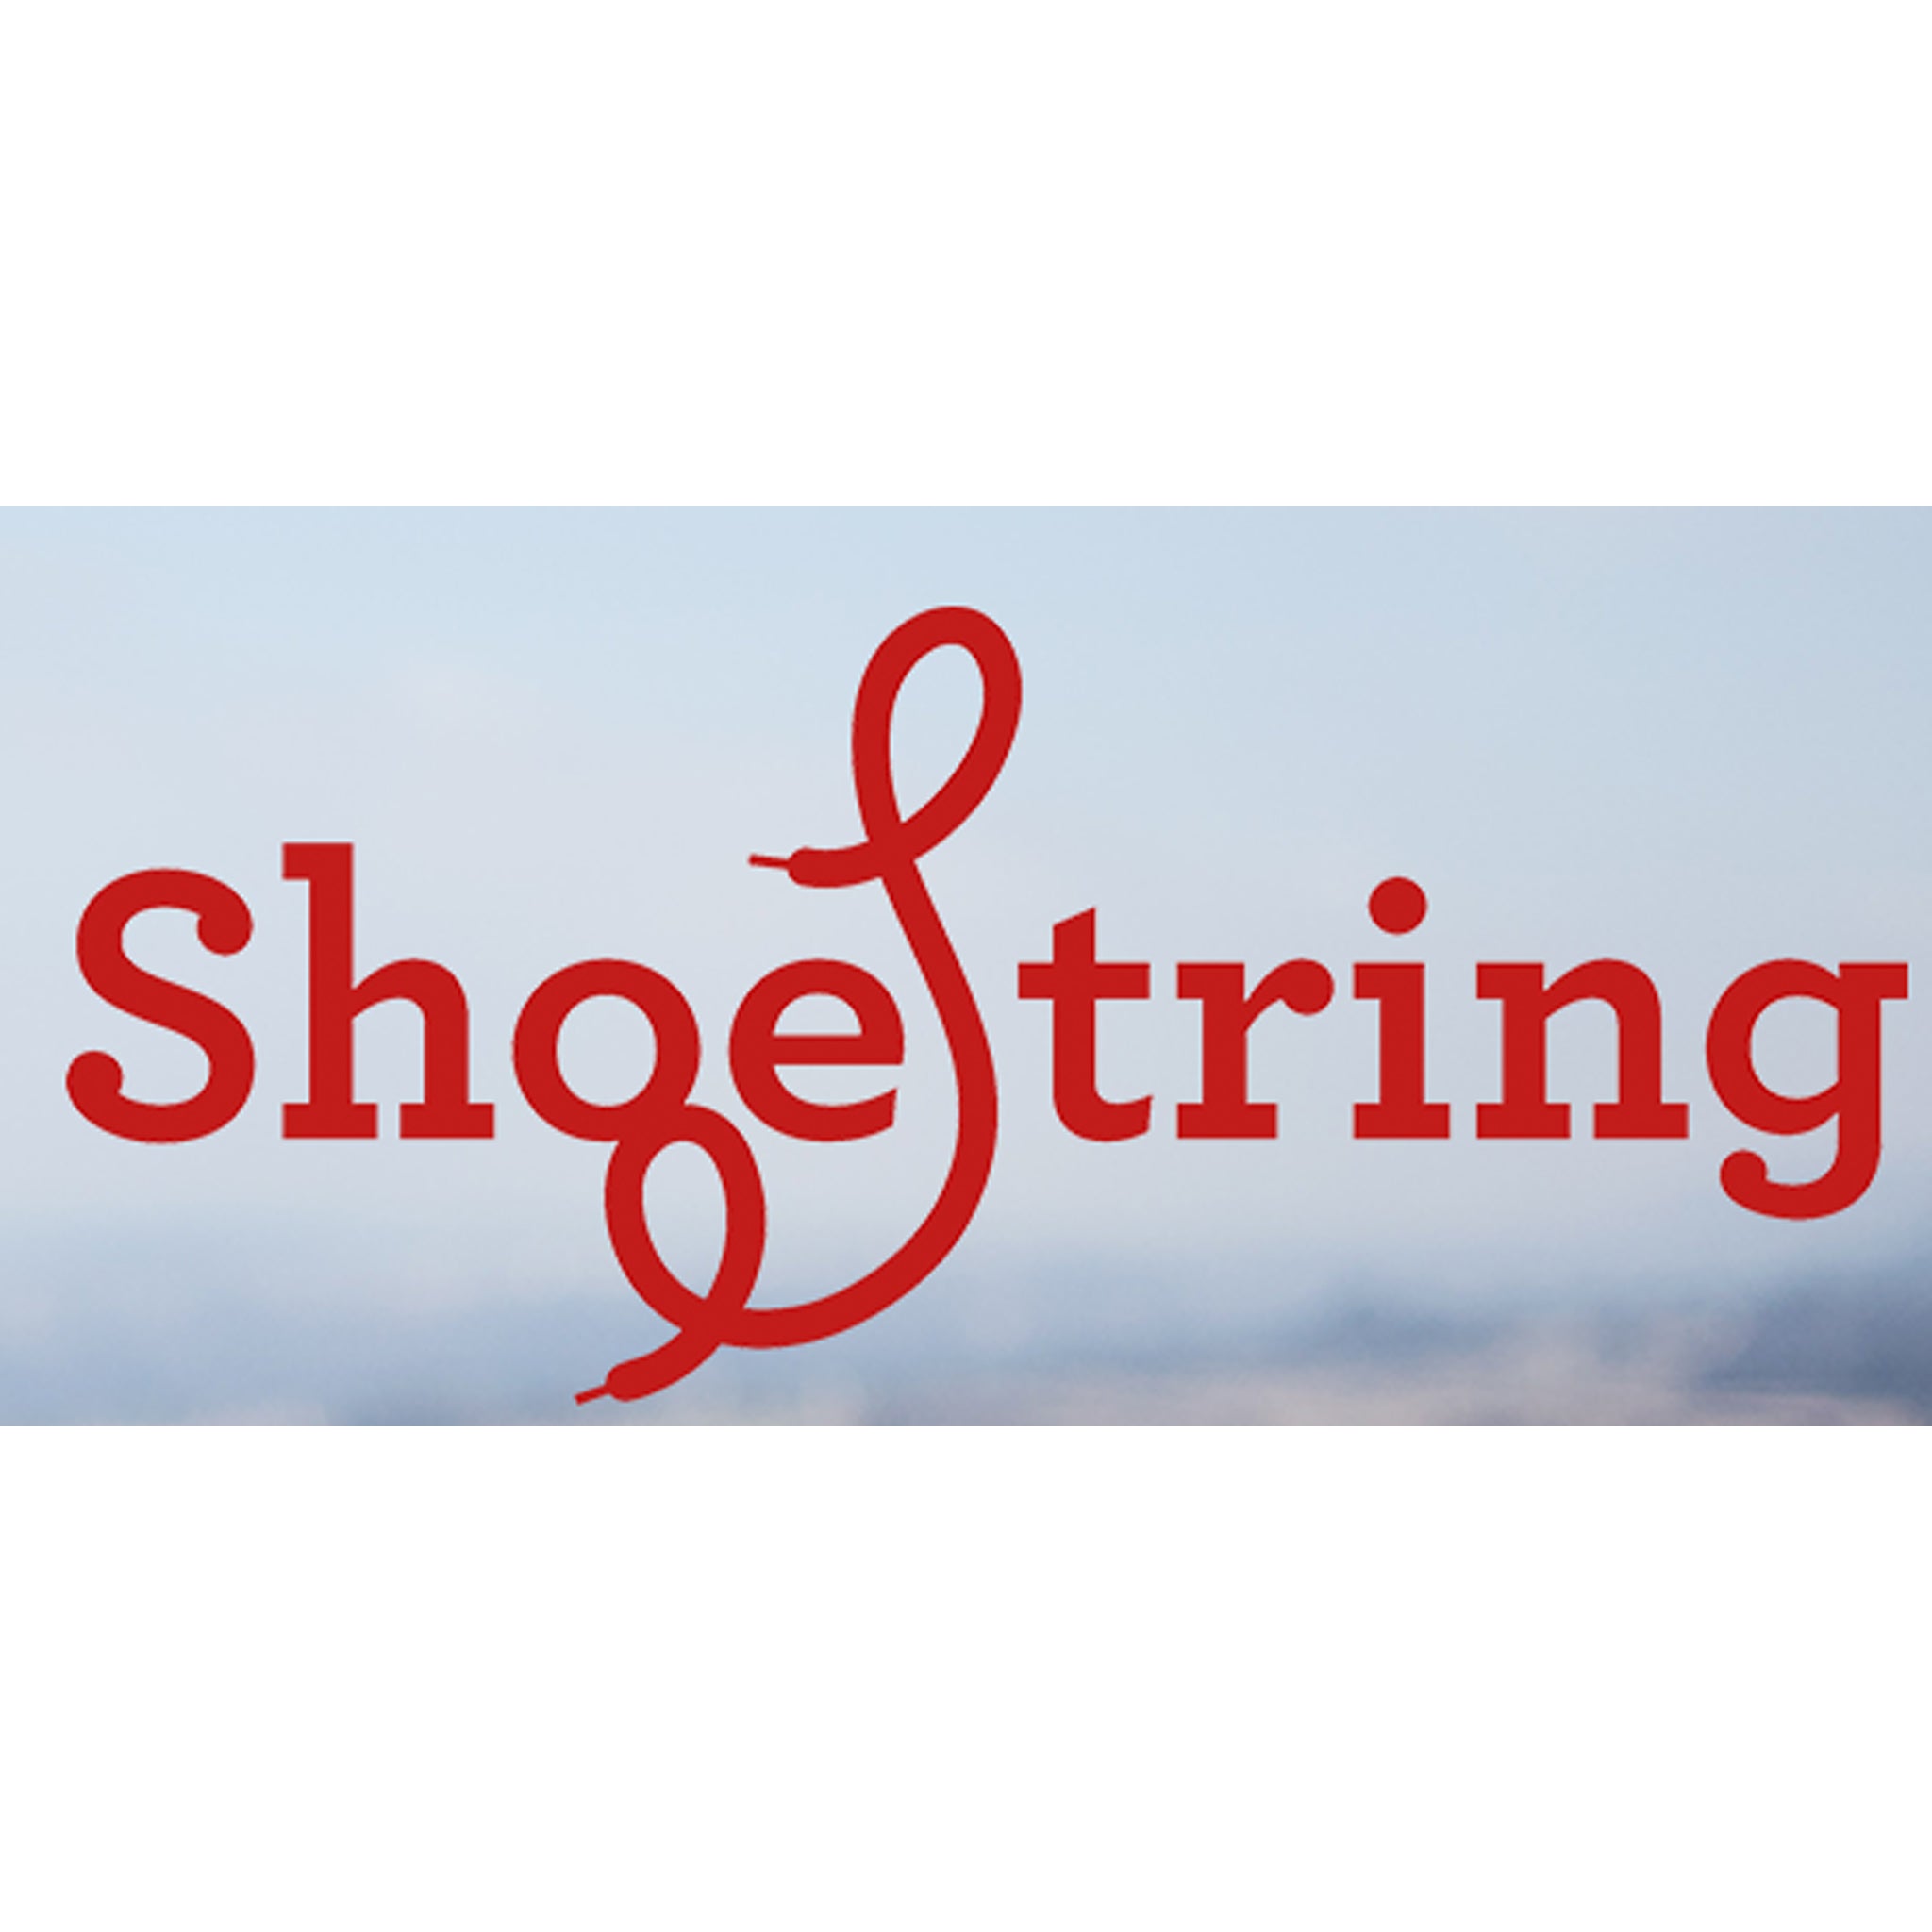 Shoe string